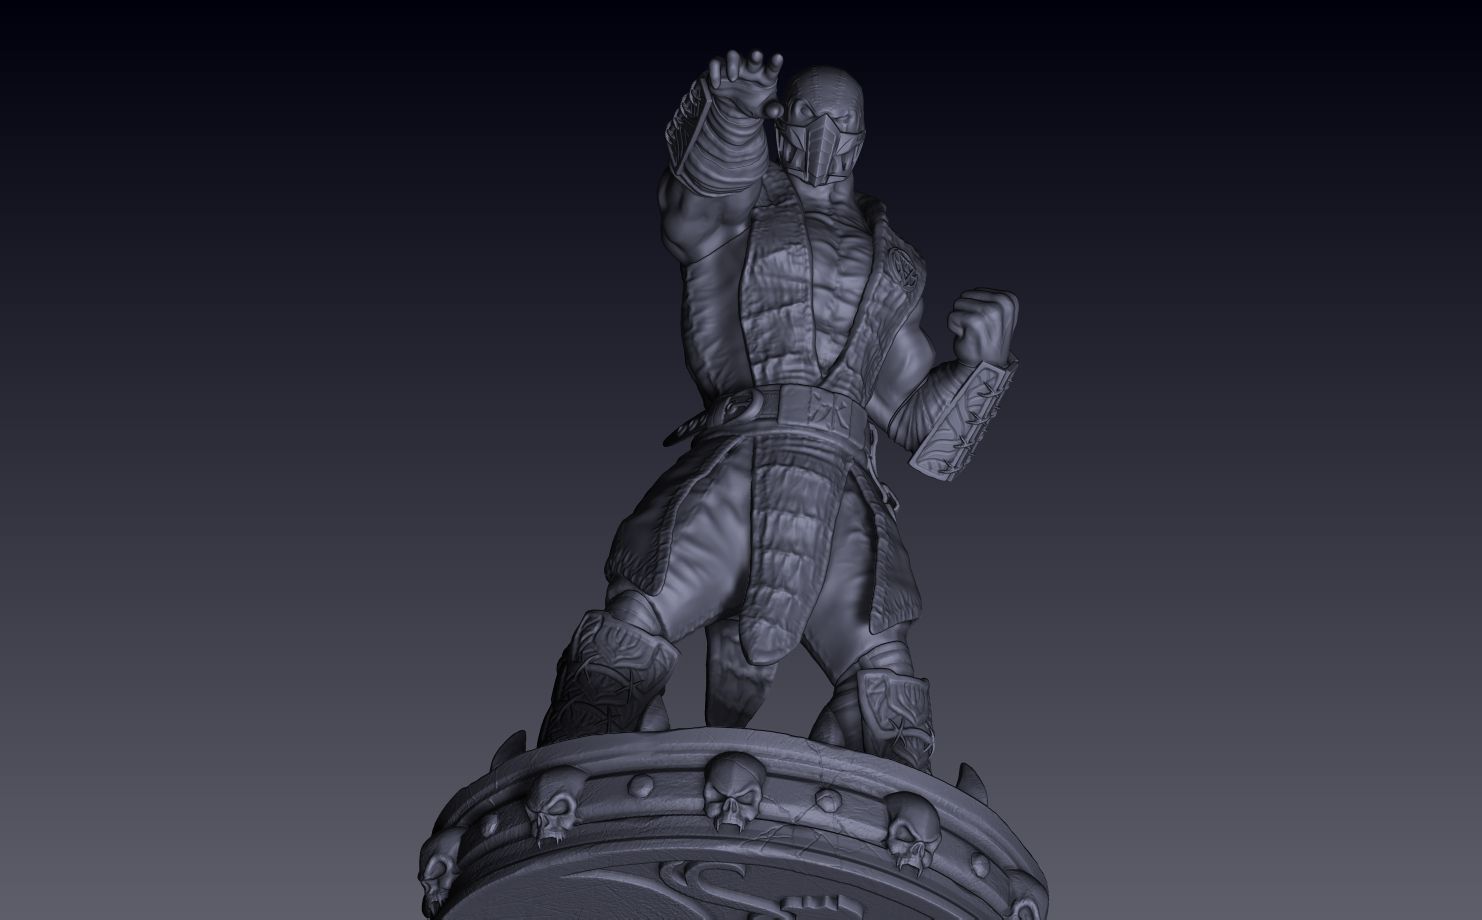 6.jpg Download OBJ file Sub-Zero Mortal Kombat • Object to 3D print, bogdan_rdjnvc